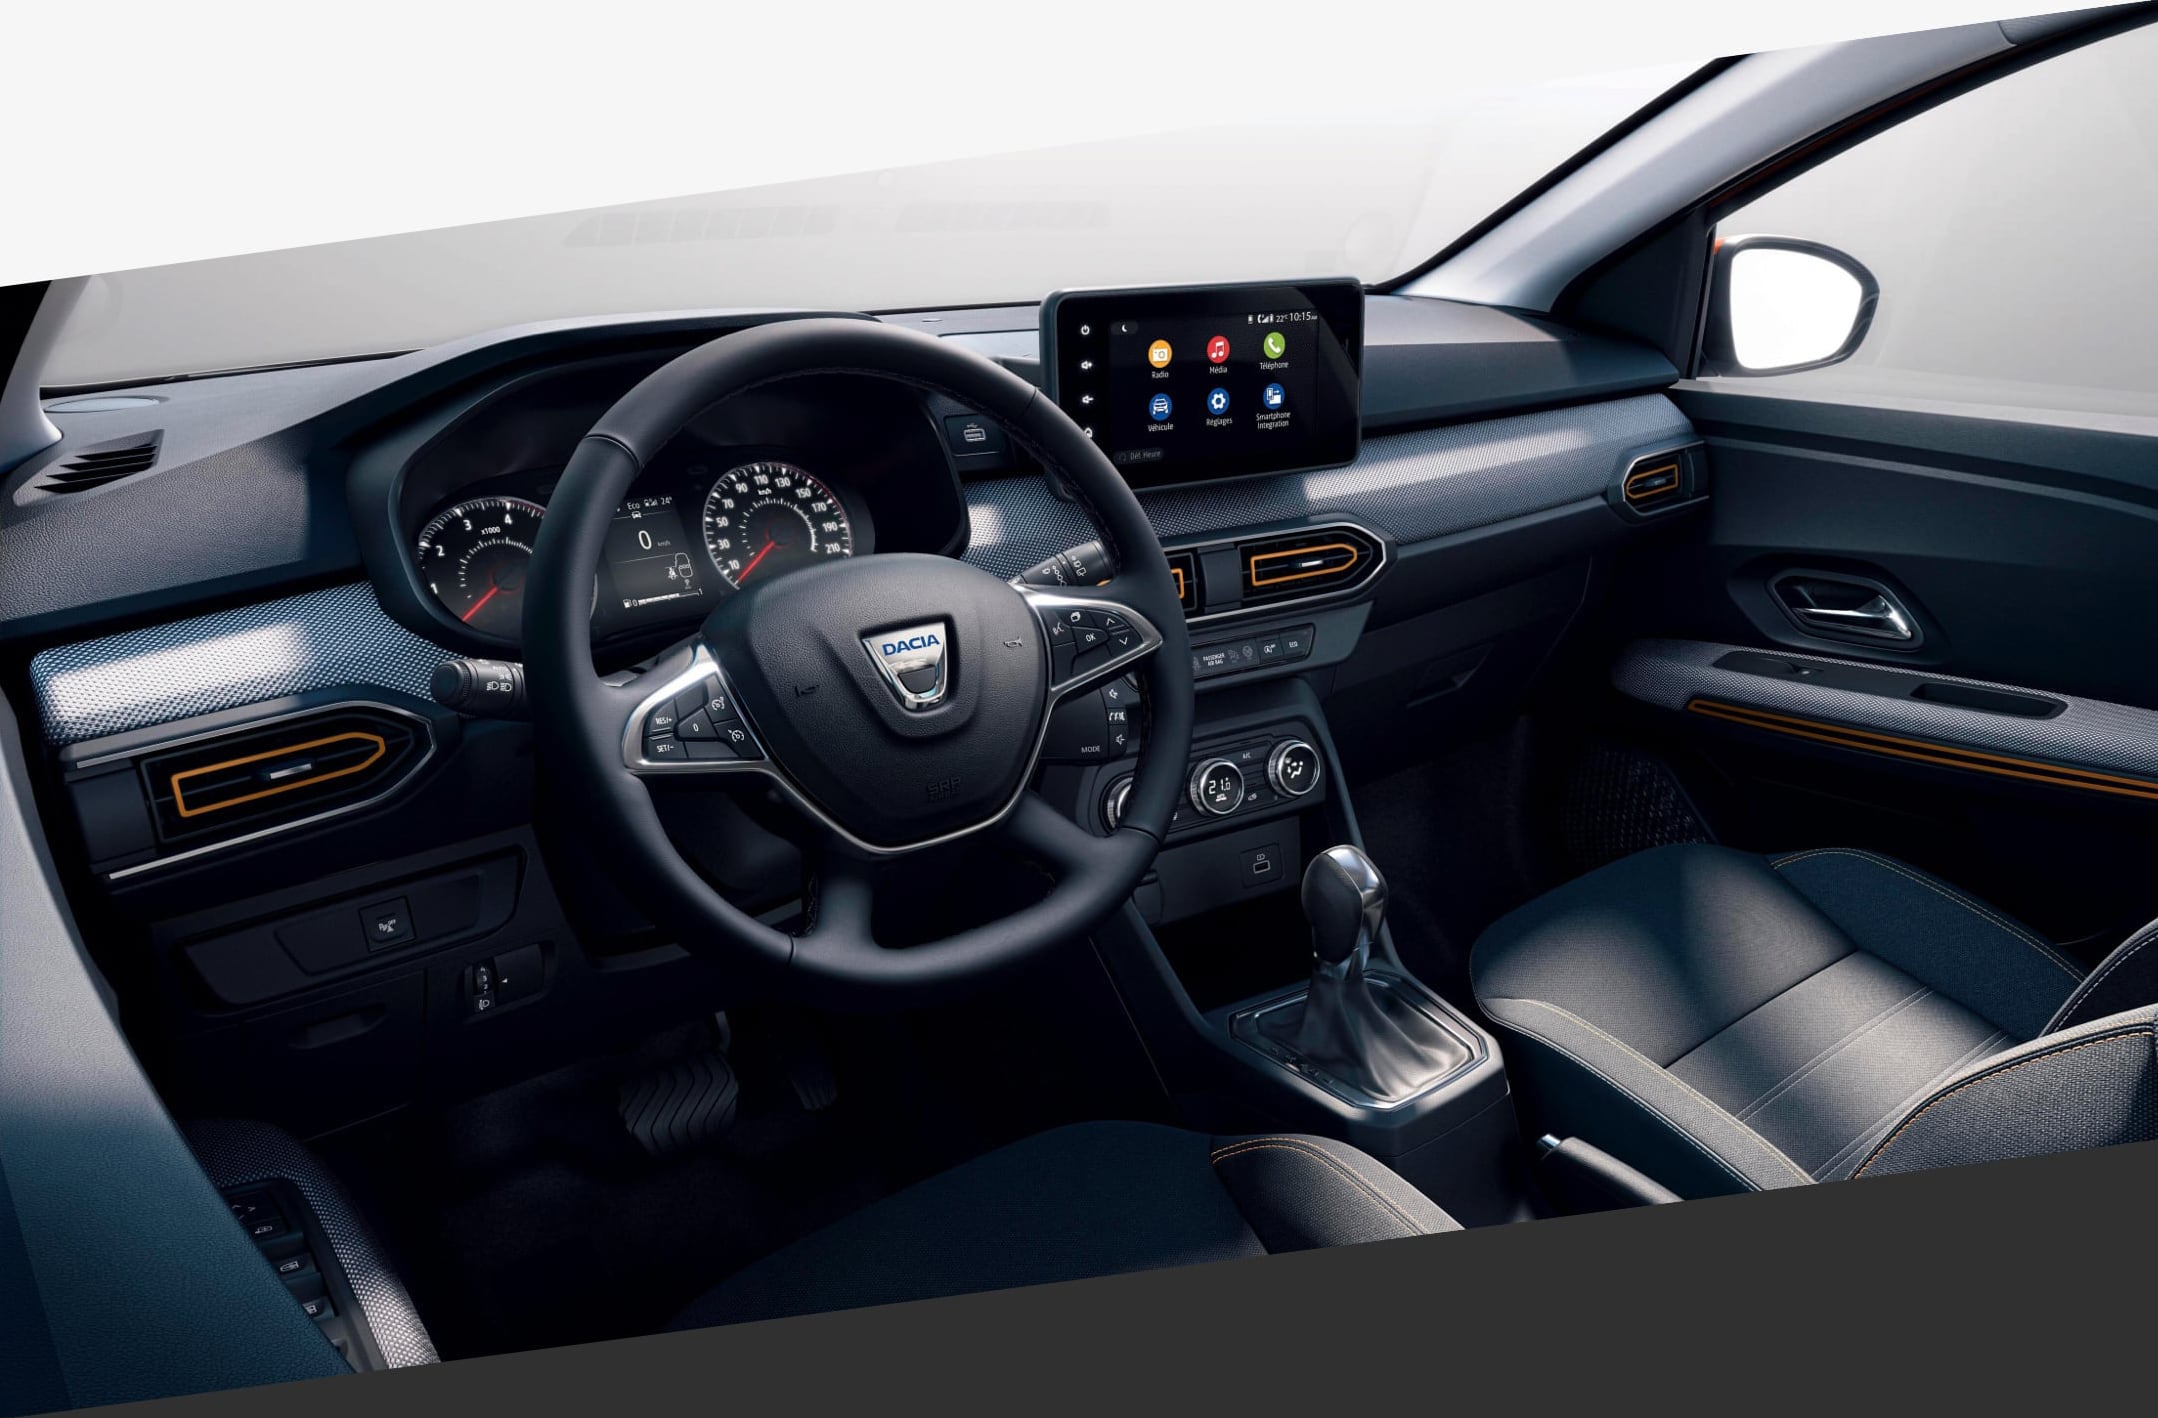 Dacia Sandero-Stepway dashboard